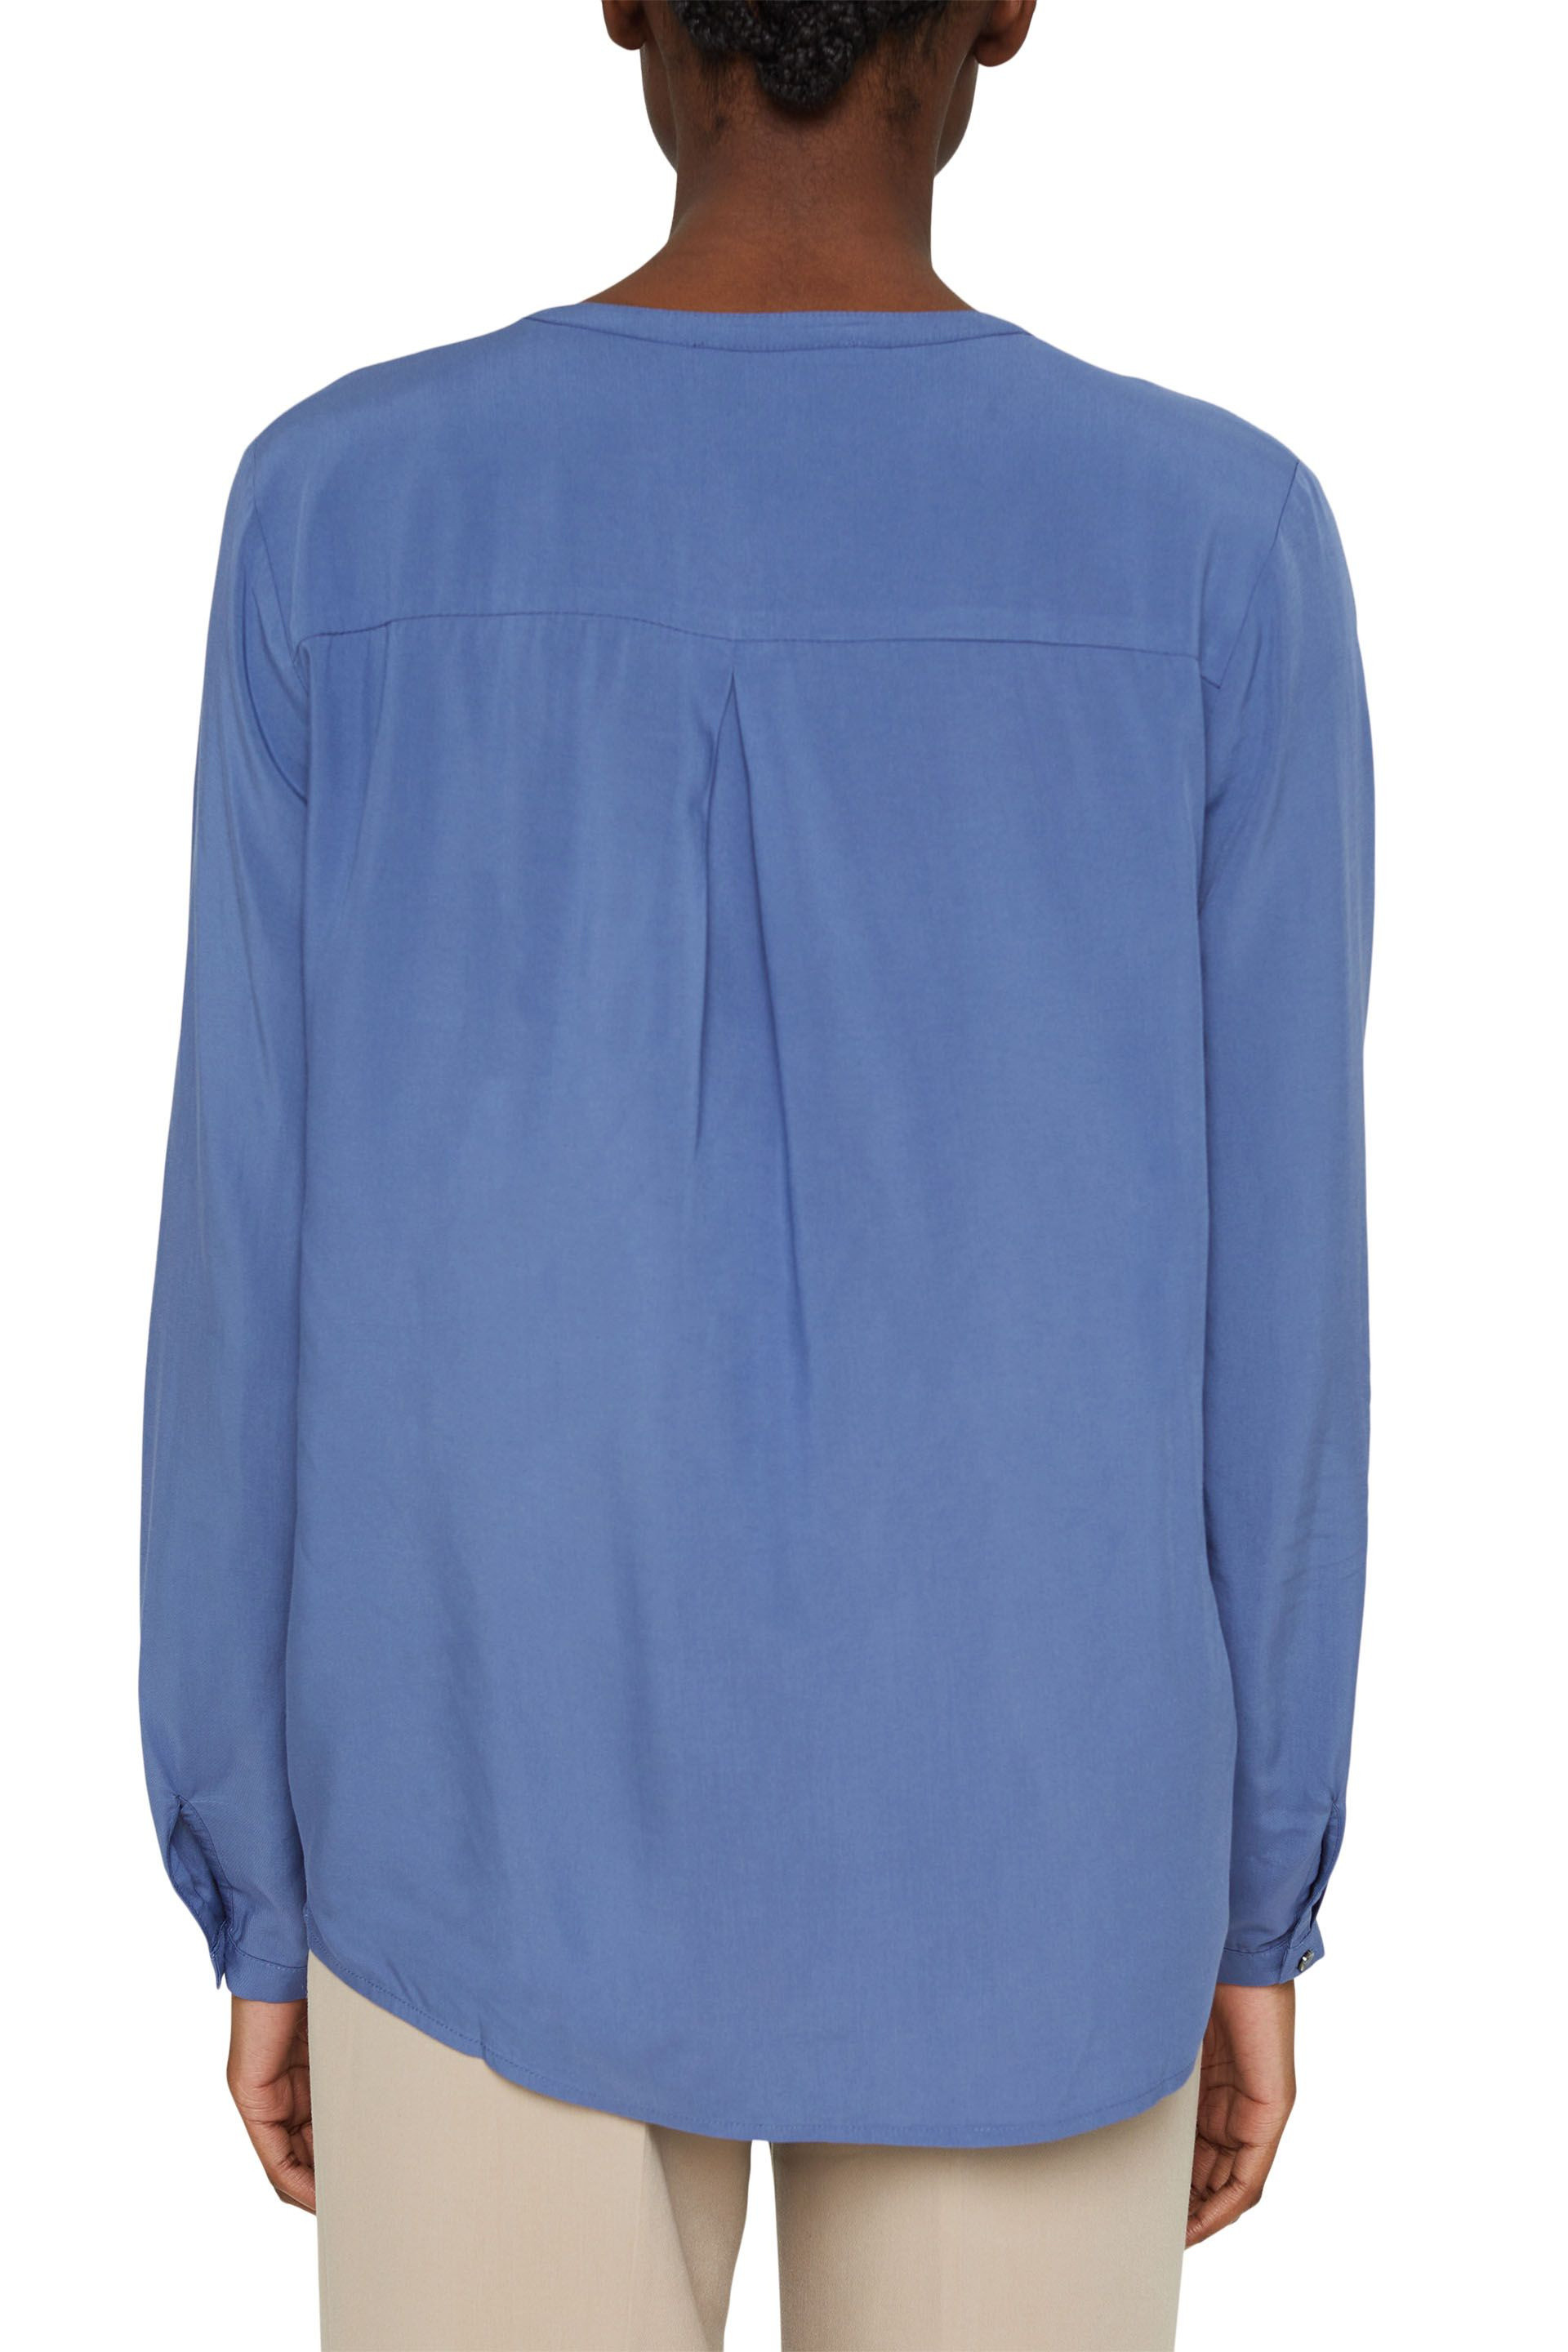 Blouse with adjustable sleeves, Blue Dark, large image number 2